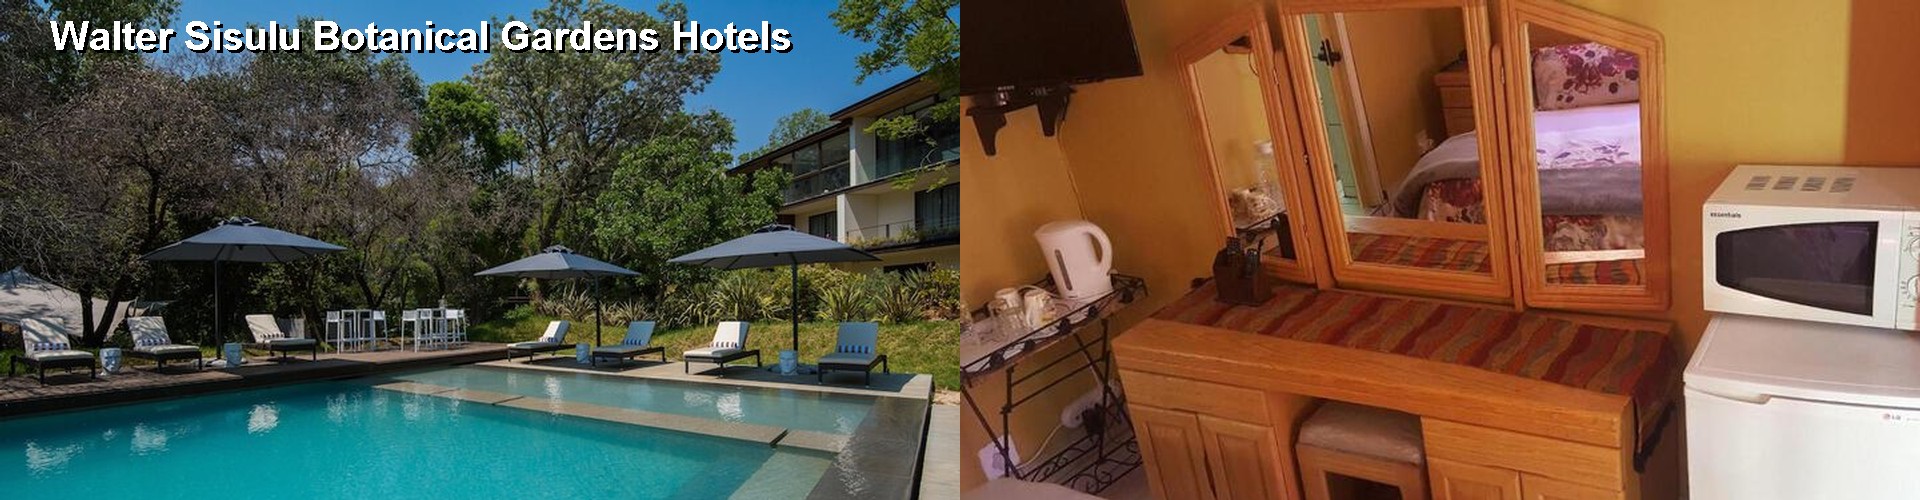 4 Best Hotels near Walter Sisulu Botanical Gardens